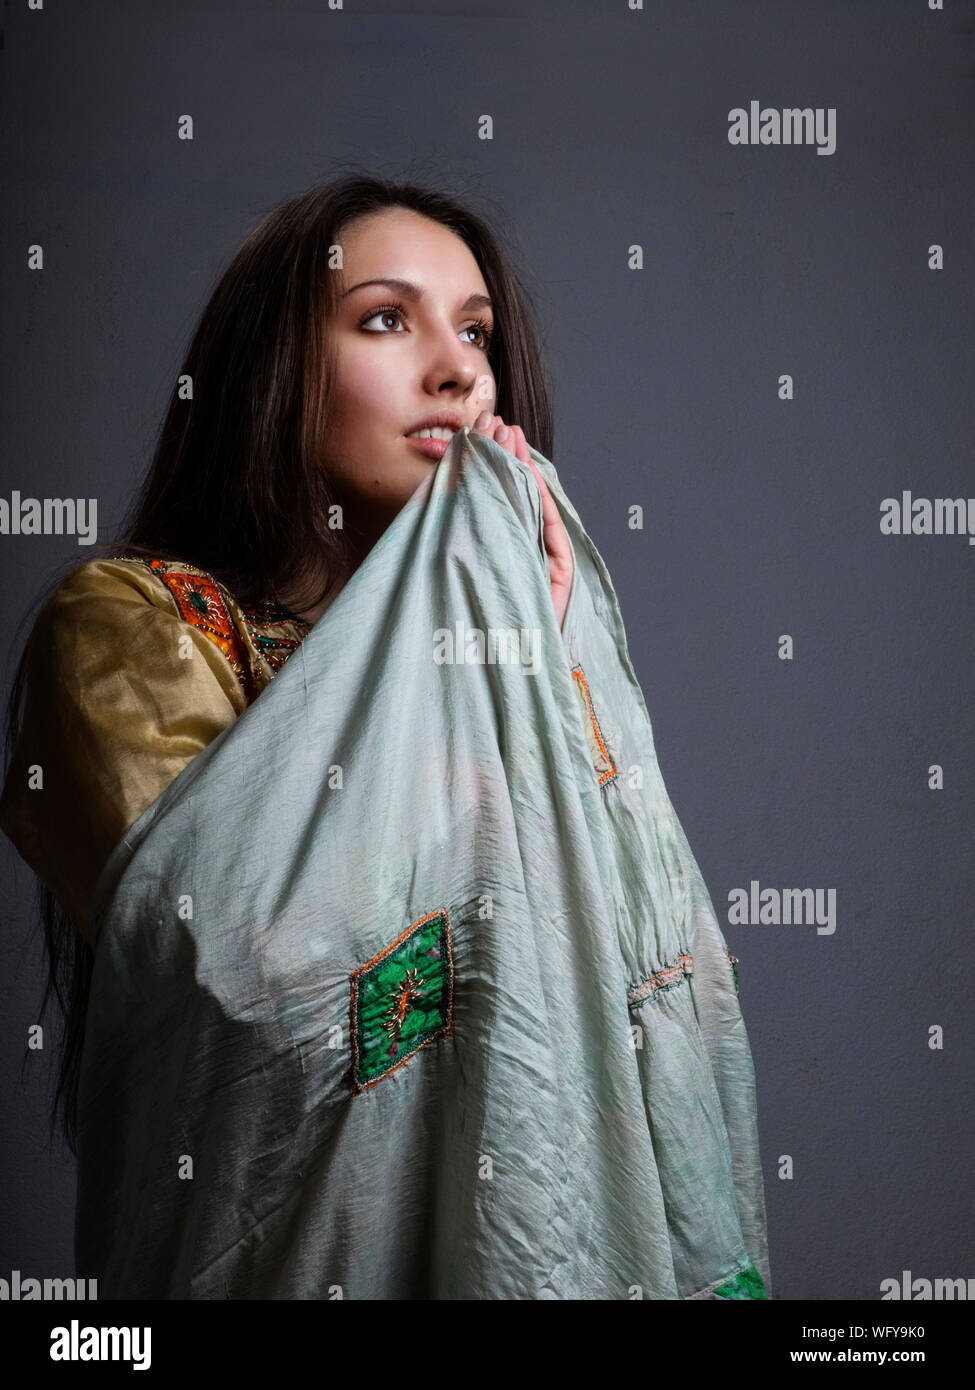 Thoughtful Beautiful Woman Holding Shawl Against Gray Background Stock Photo